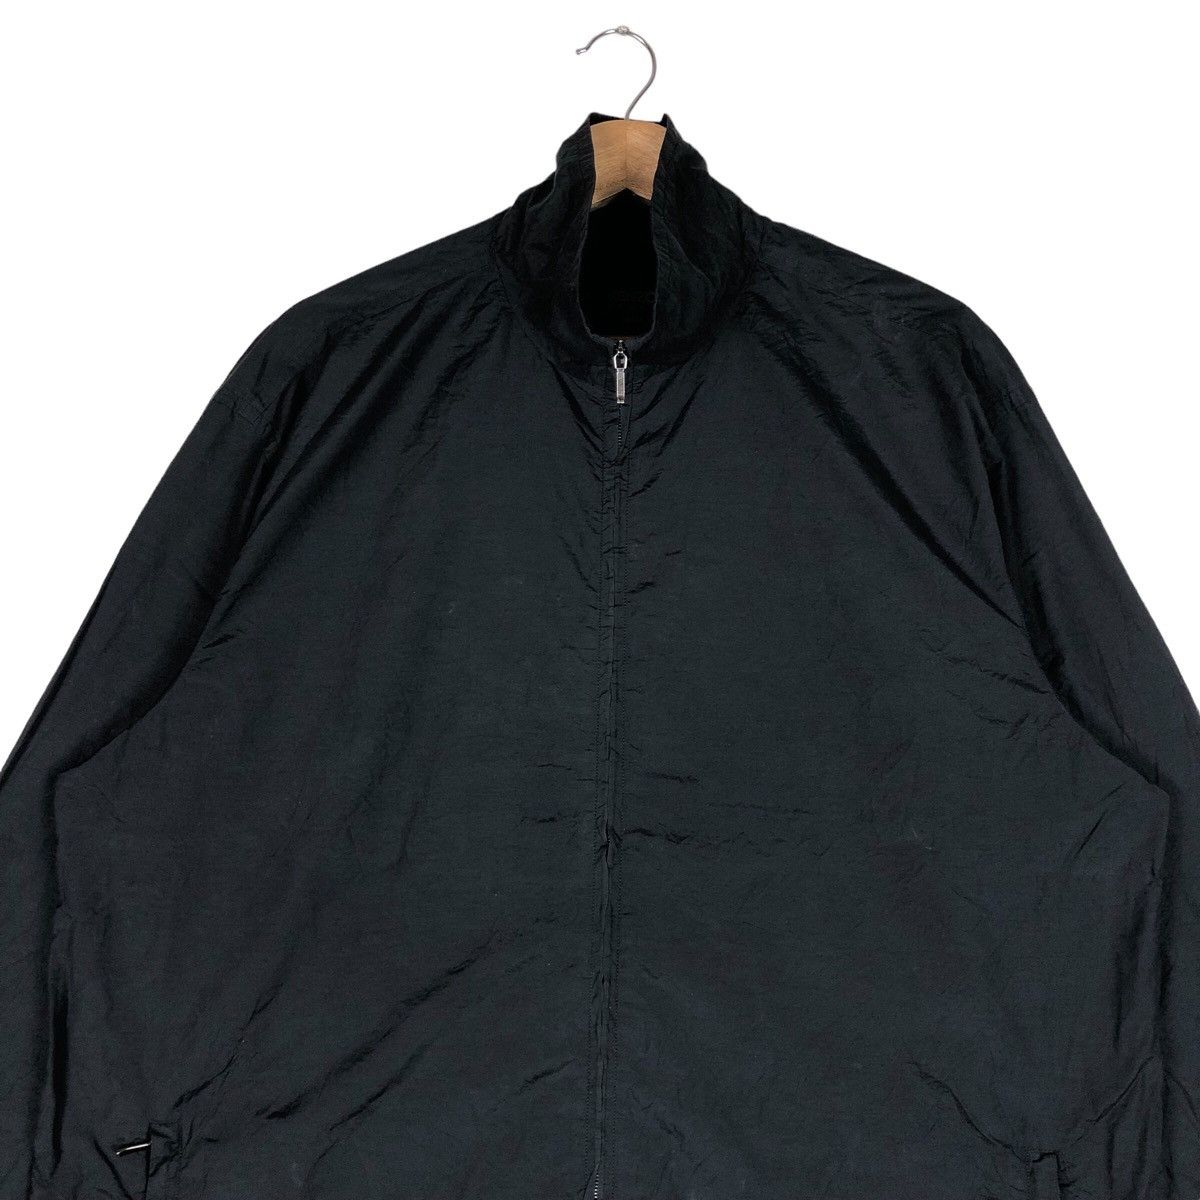 Kenzo Vintage Kenzo Sweater Windbreaker All Black Rare Size US XL / EU 56 / 4 - 2 Preview